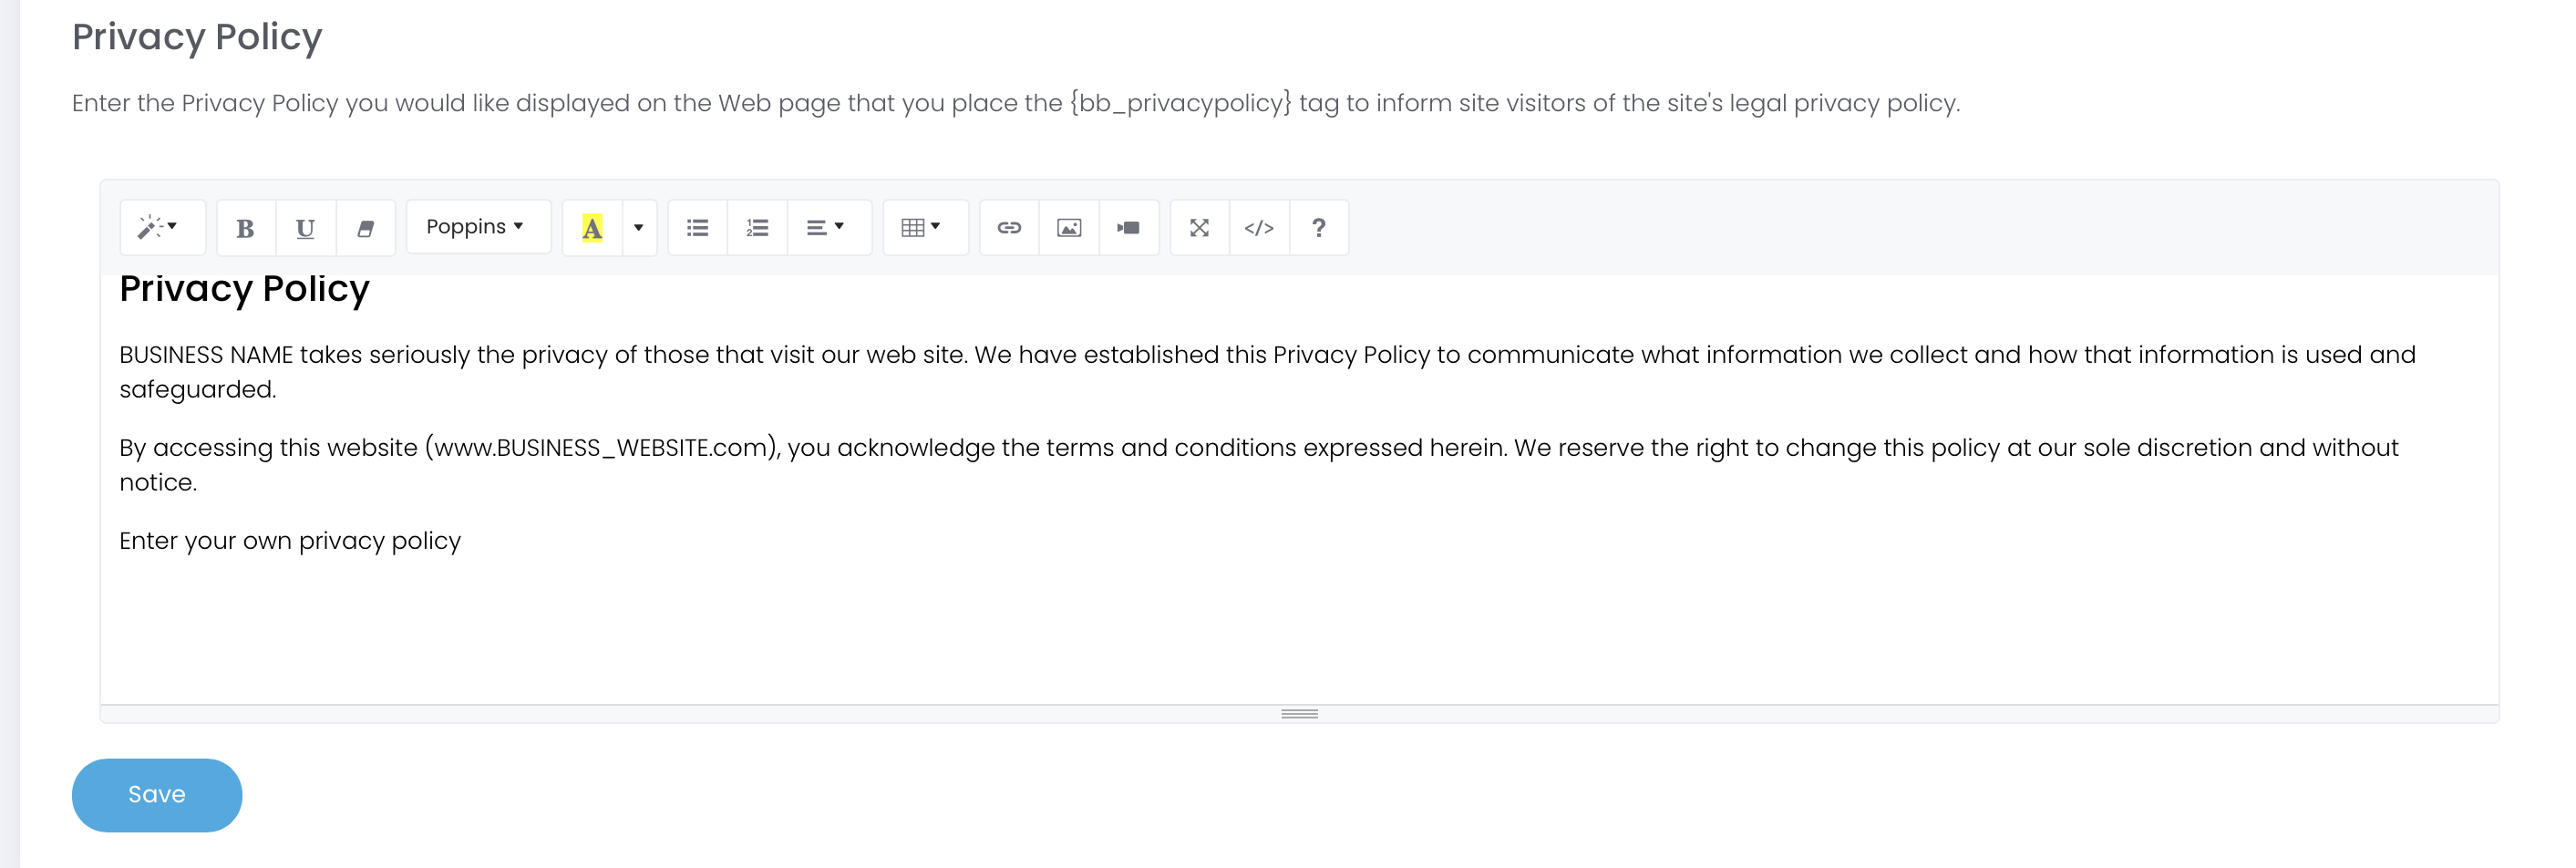 Privacy Policy tab screenshot